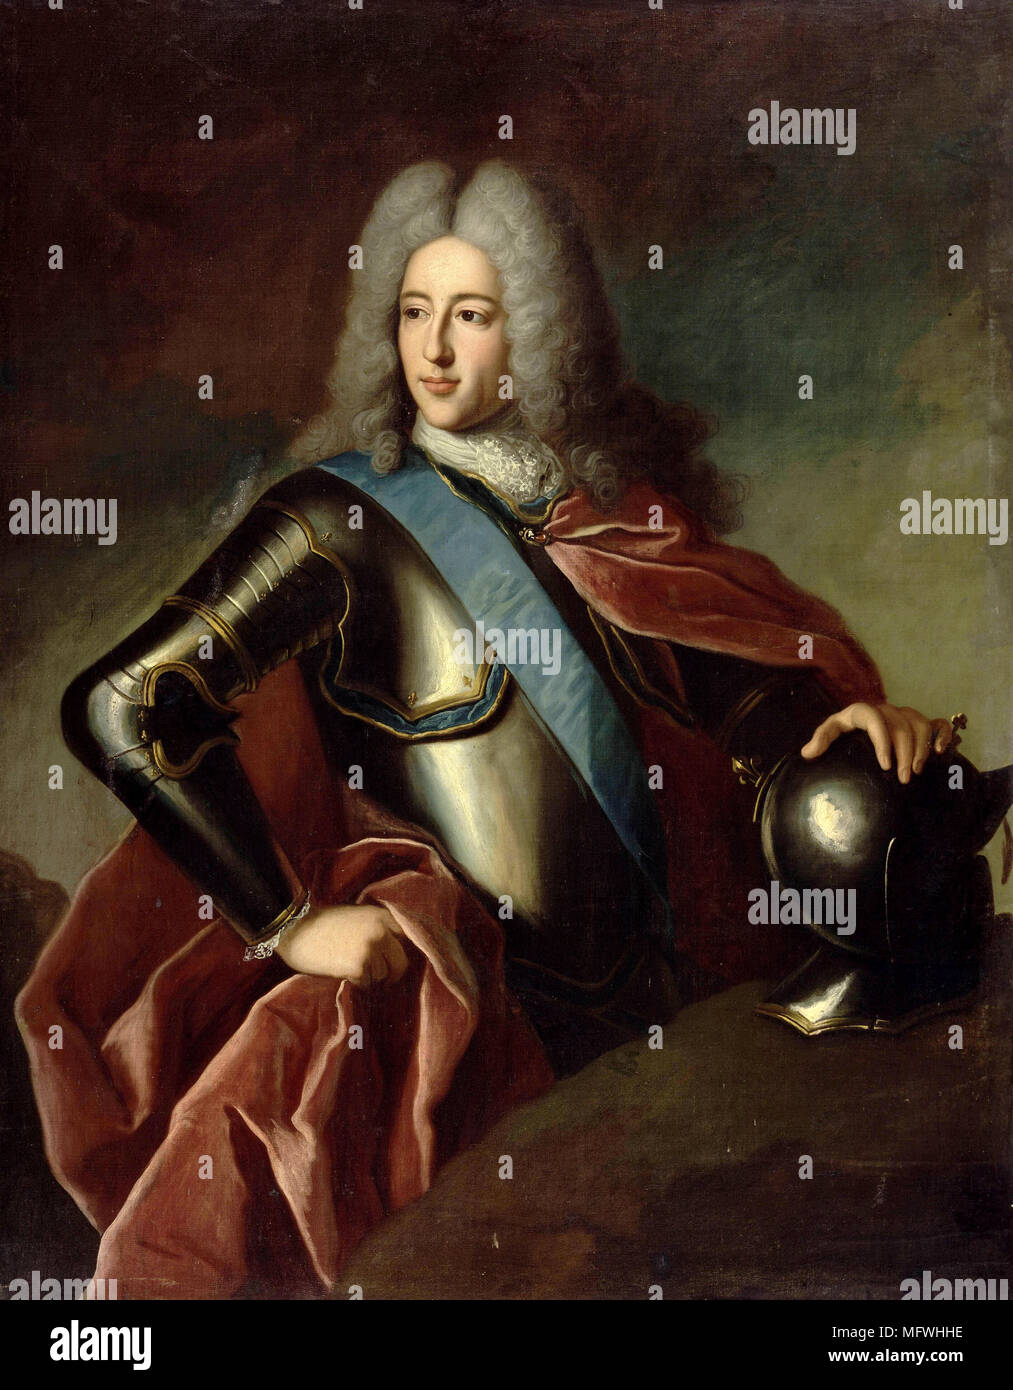 Louis Henri de Bourbon, Prince of Condé, Duke of Bourbon (1692-1740) prime minister of France 1723 to 1726. Stock Photo